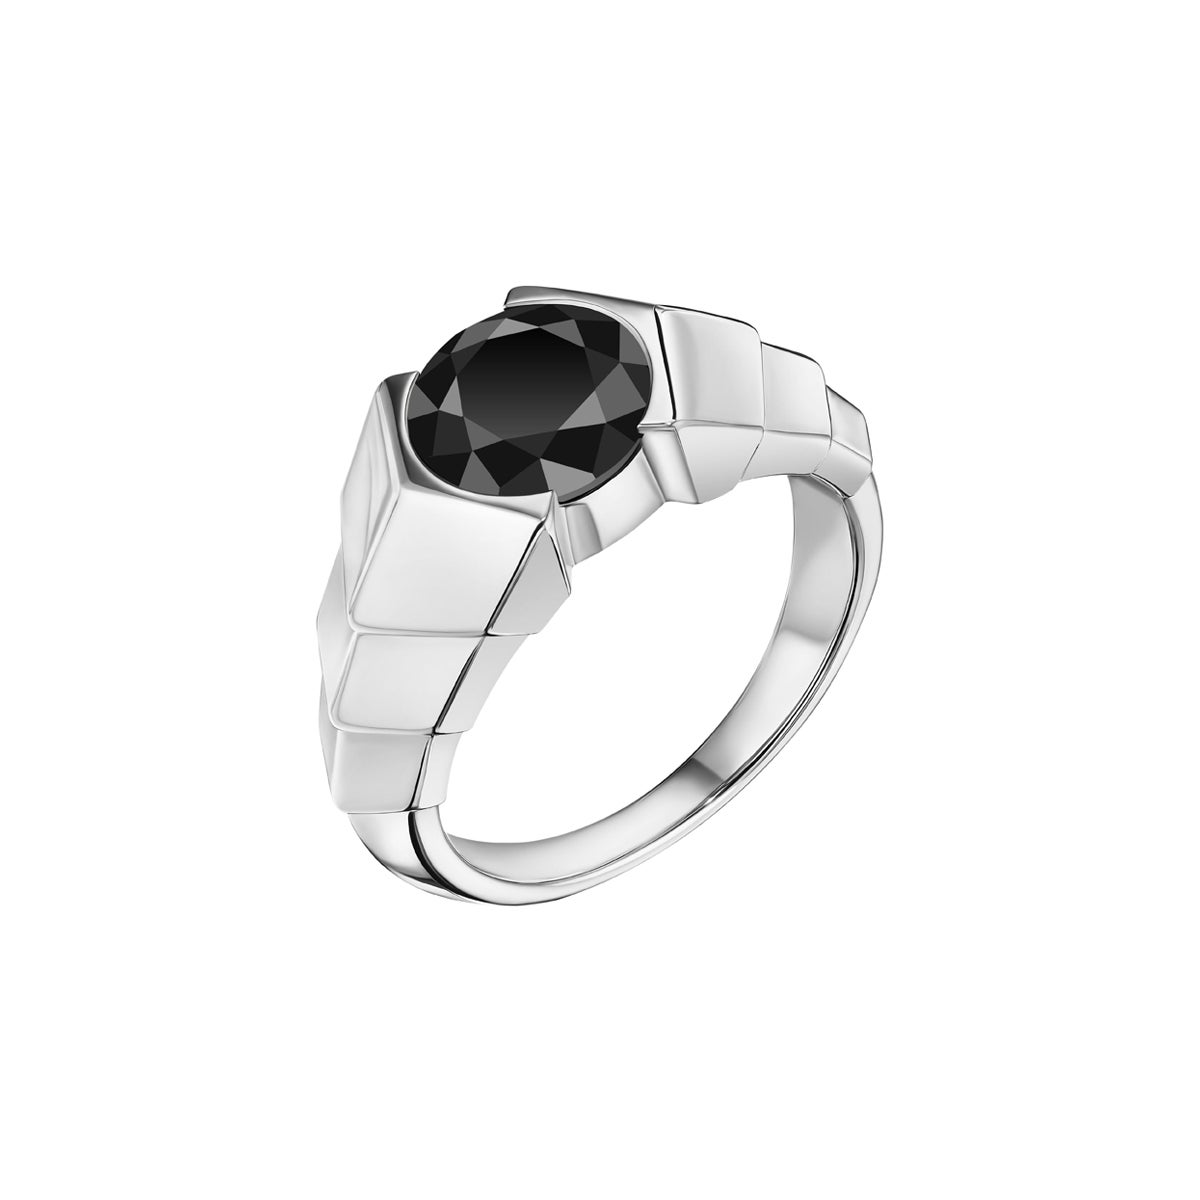 For Sale:  VL Cepher Black Diamond 18k White Gold Arris Large Ring